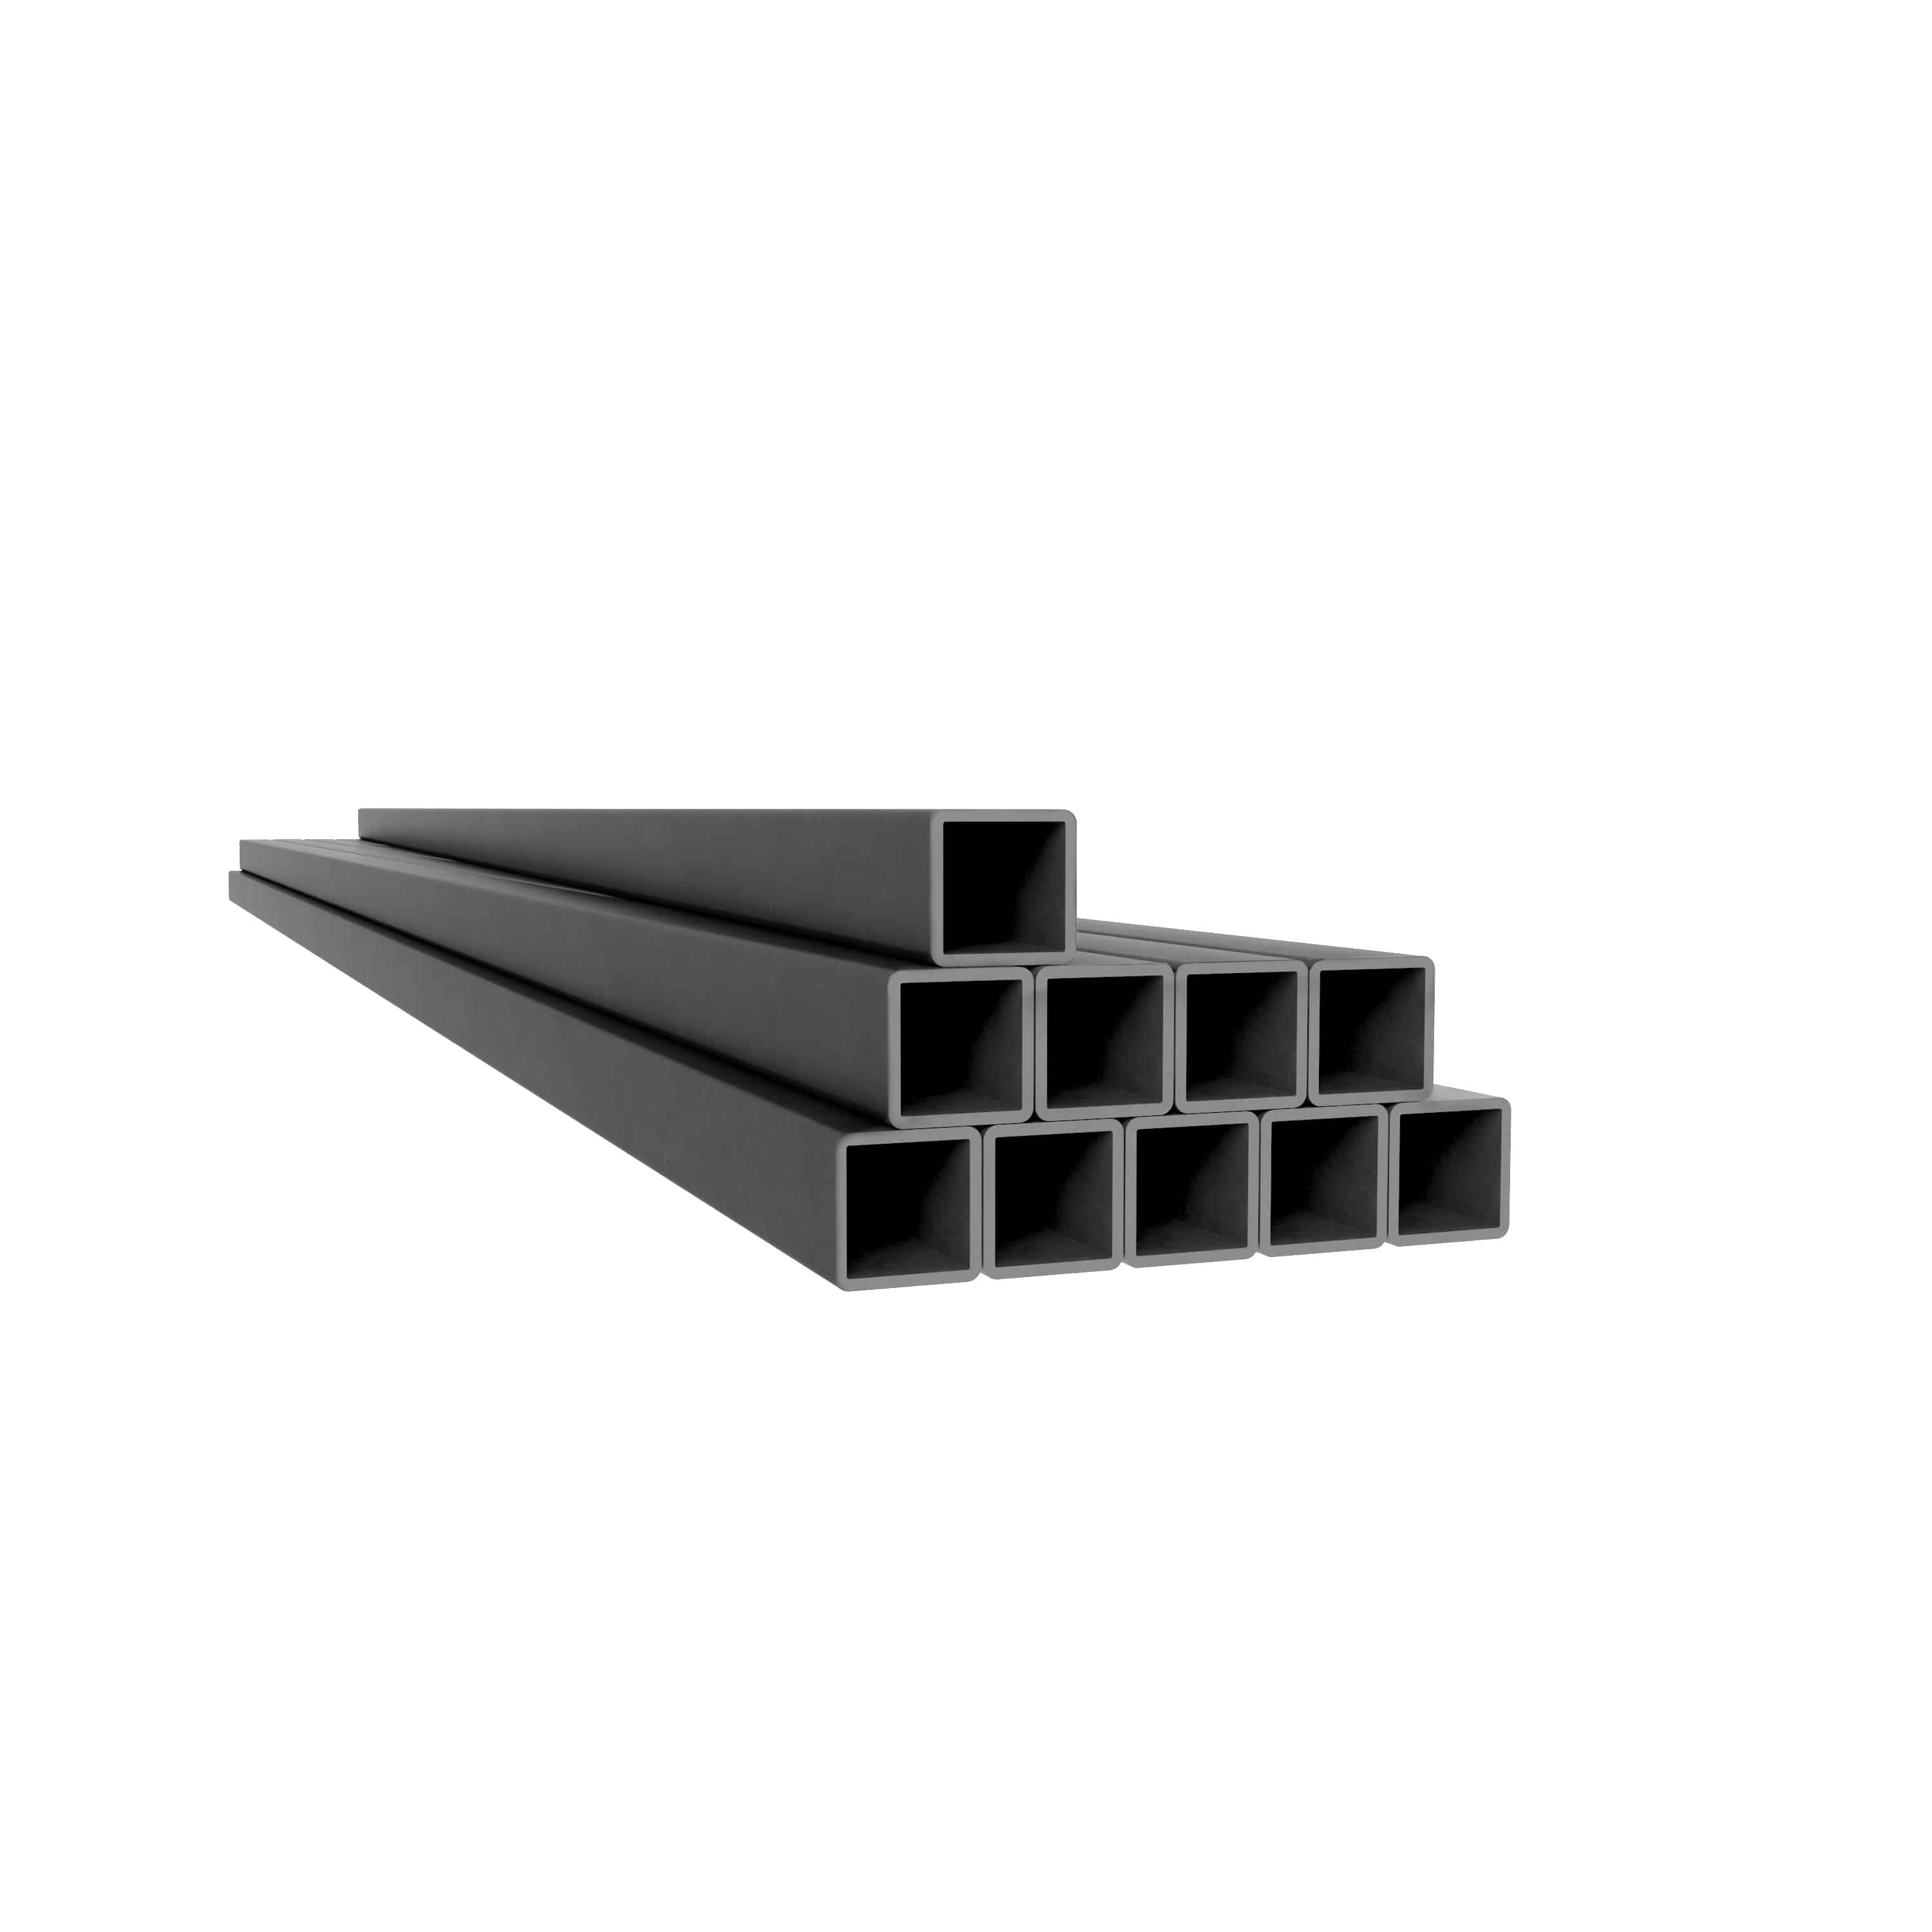 Square Pipe - Square pipe 100 x 100 x 5 mm S235-12LM, https:maxbau.ro